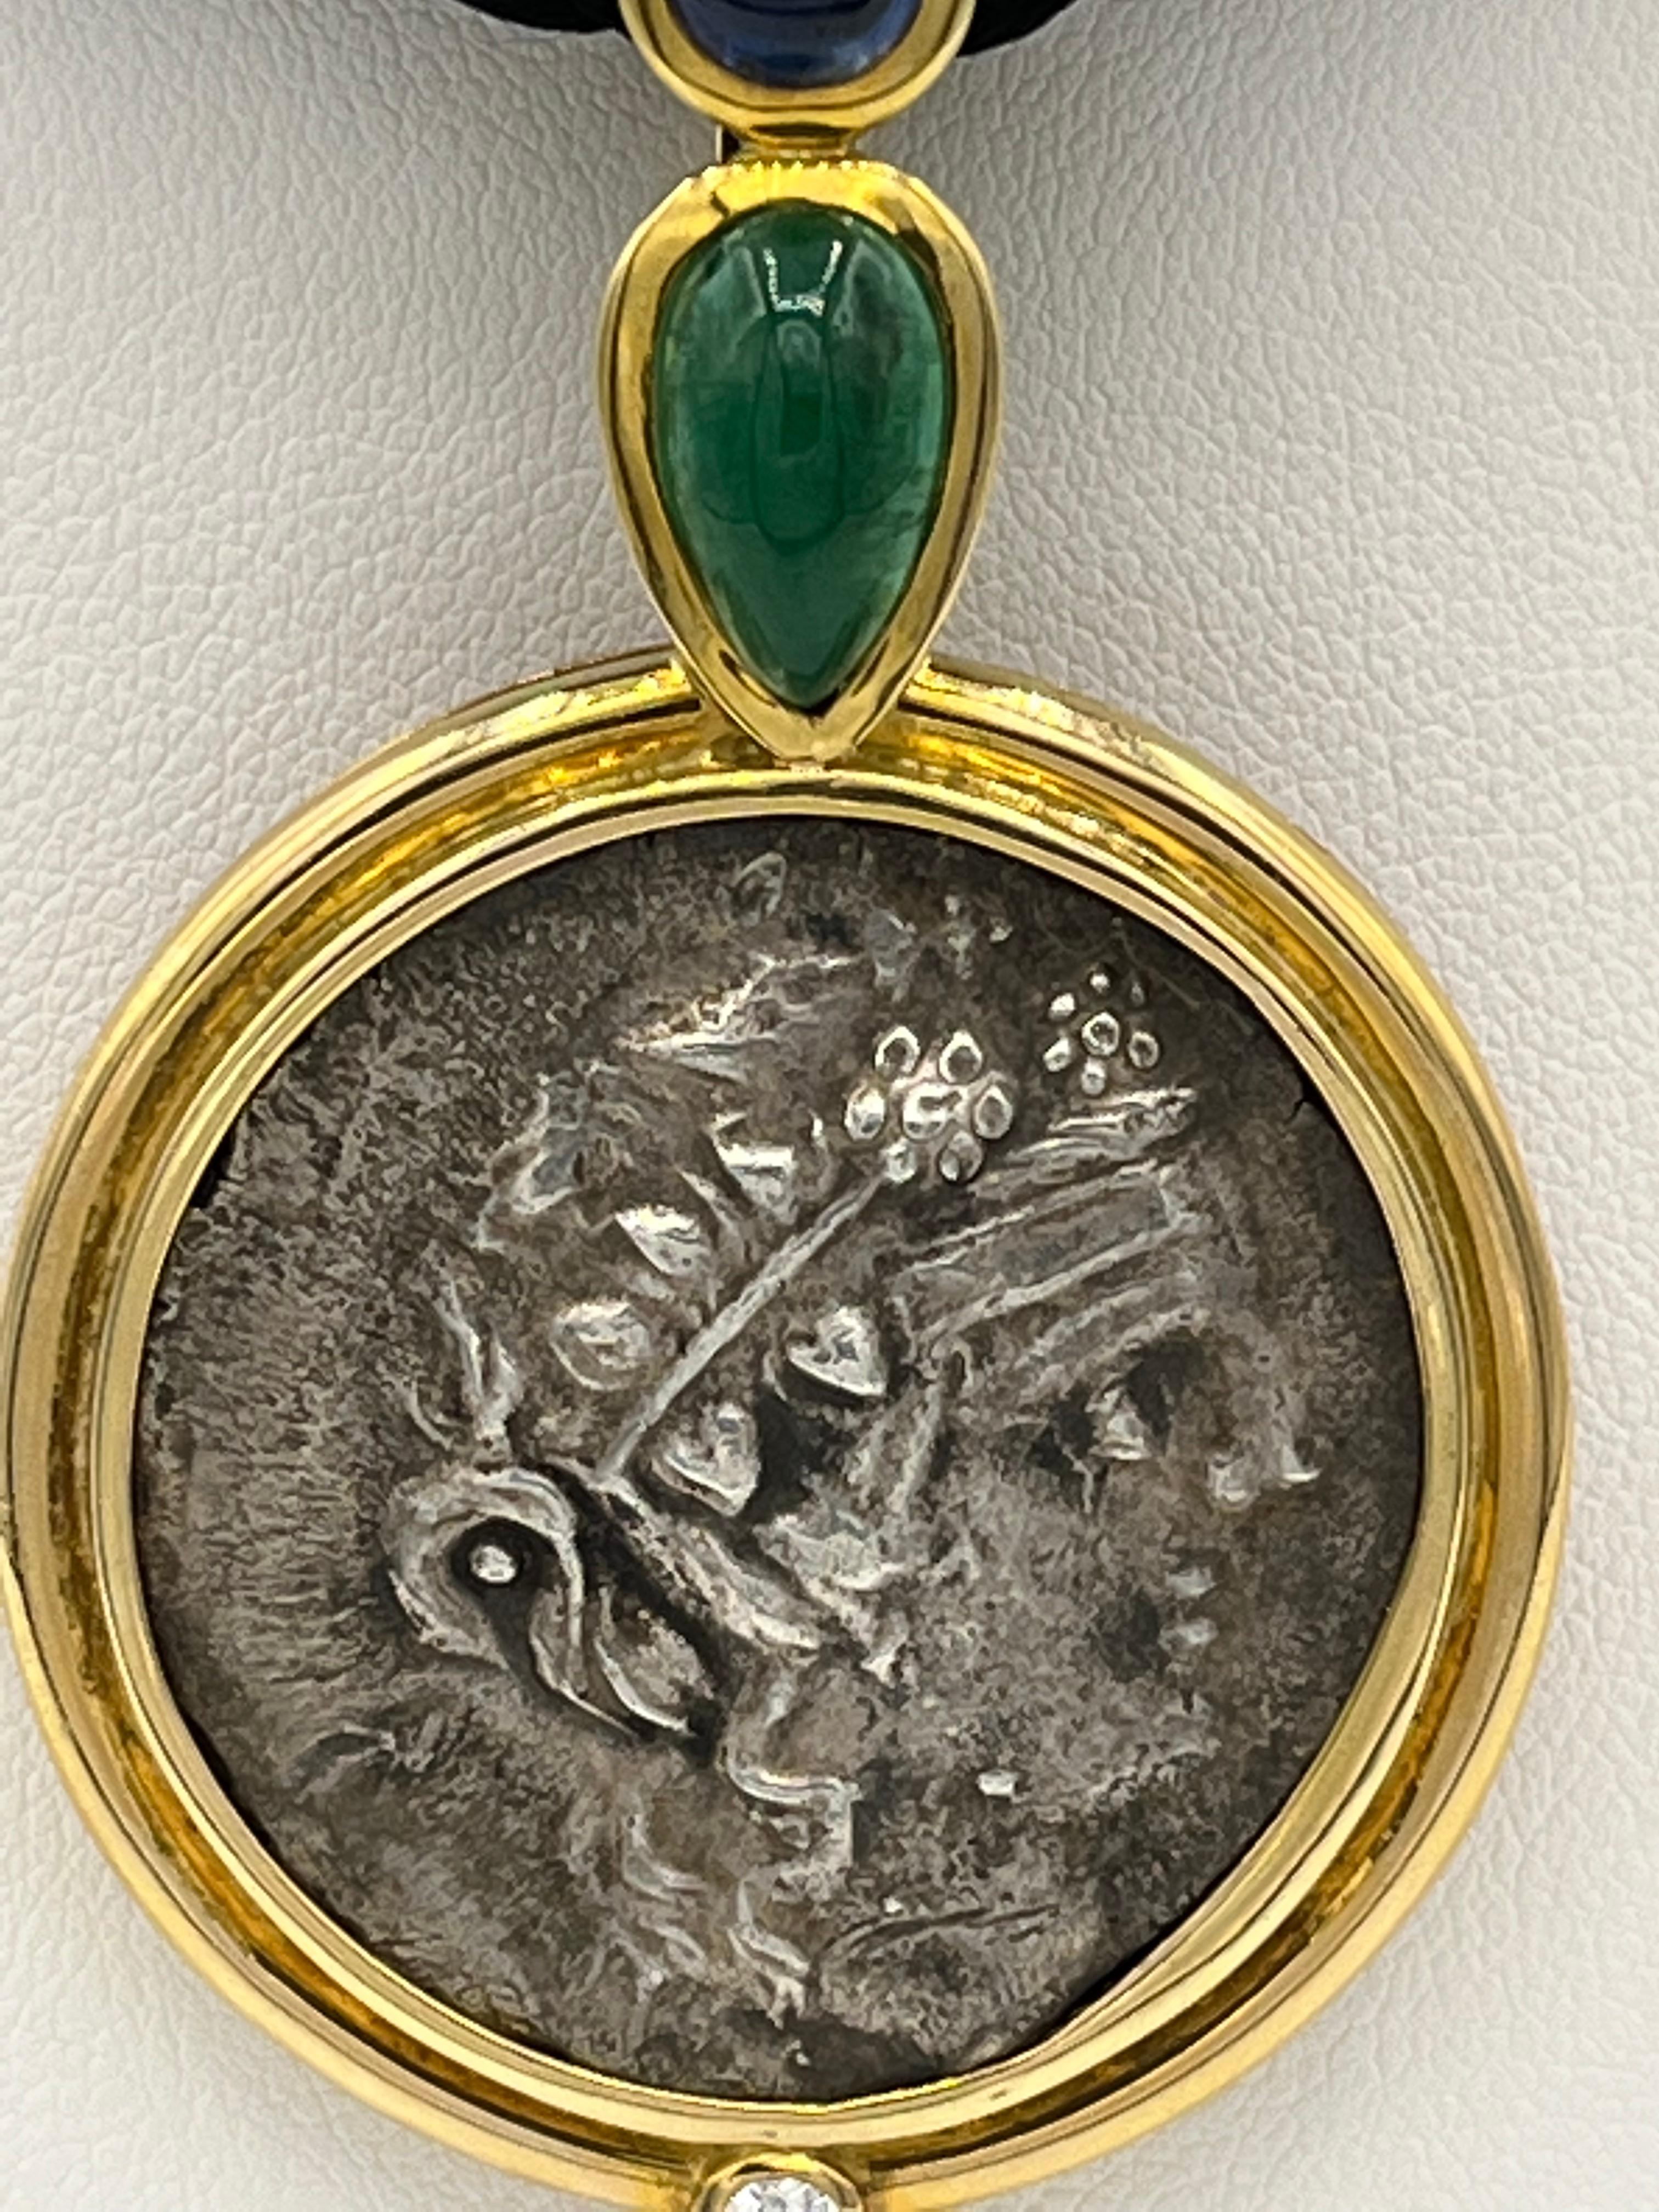 18k yellow gold
1 antik coin
1 emerald trop
1 cabouchon blue sapphire
1 diamond
36 gram
diameter 4 cm
long 6,50 cm